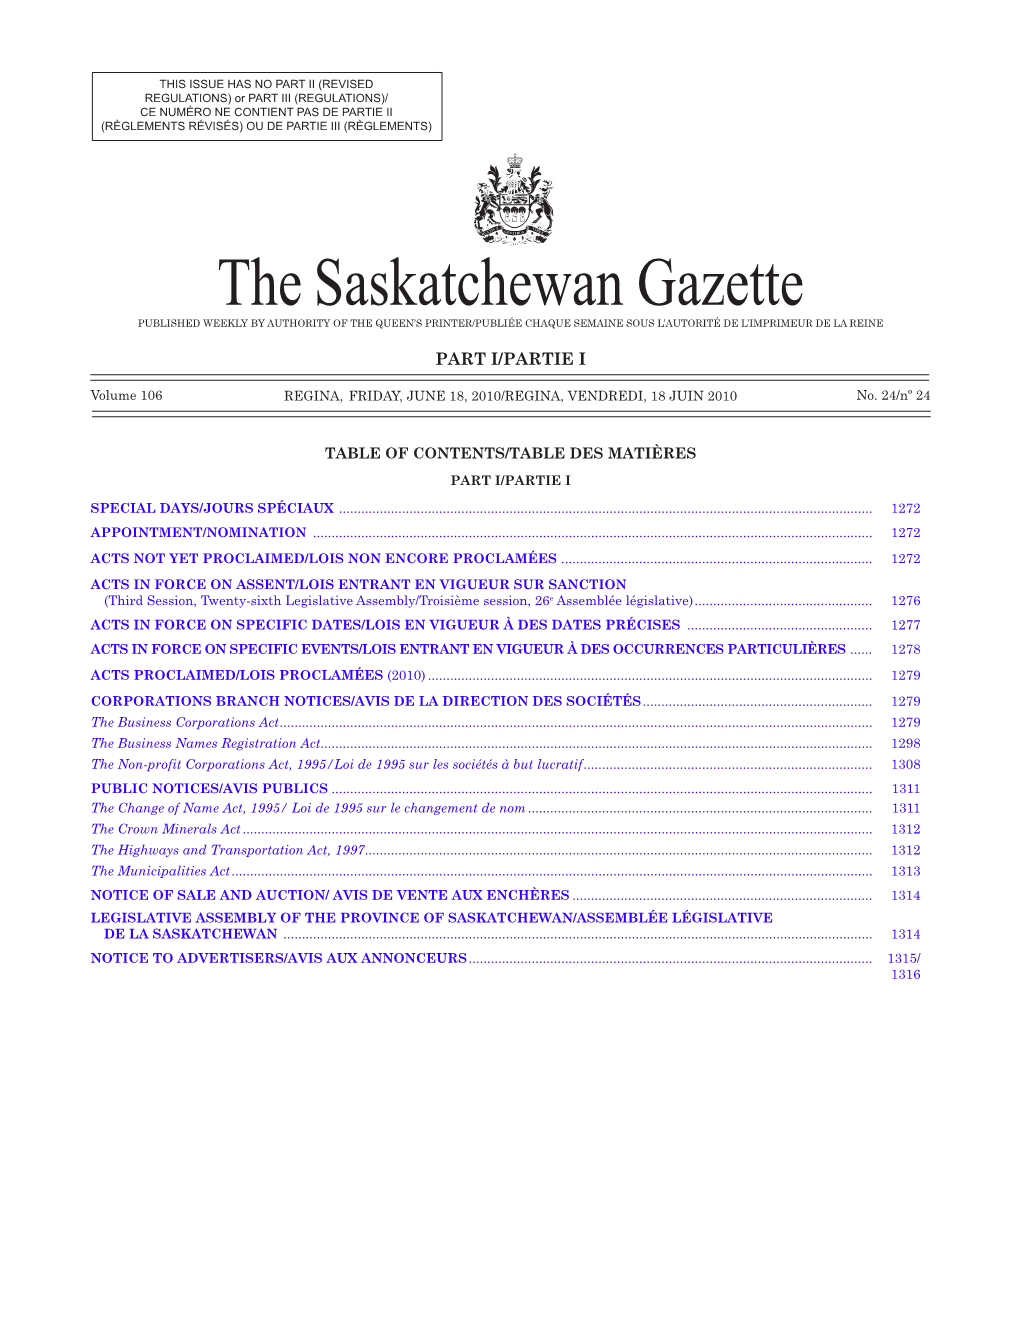 Sask Gazette, Part I, June 18, 2010